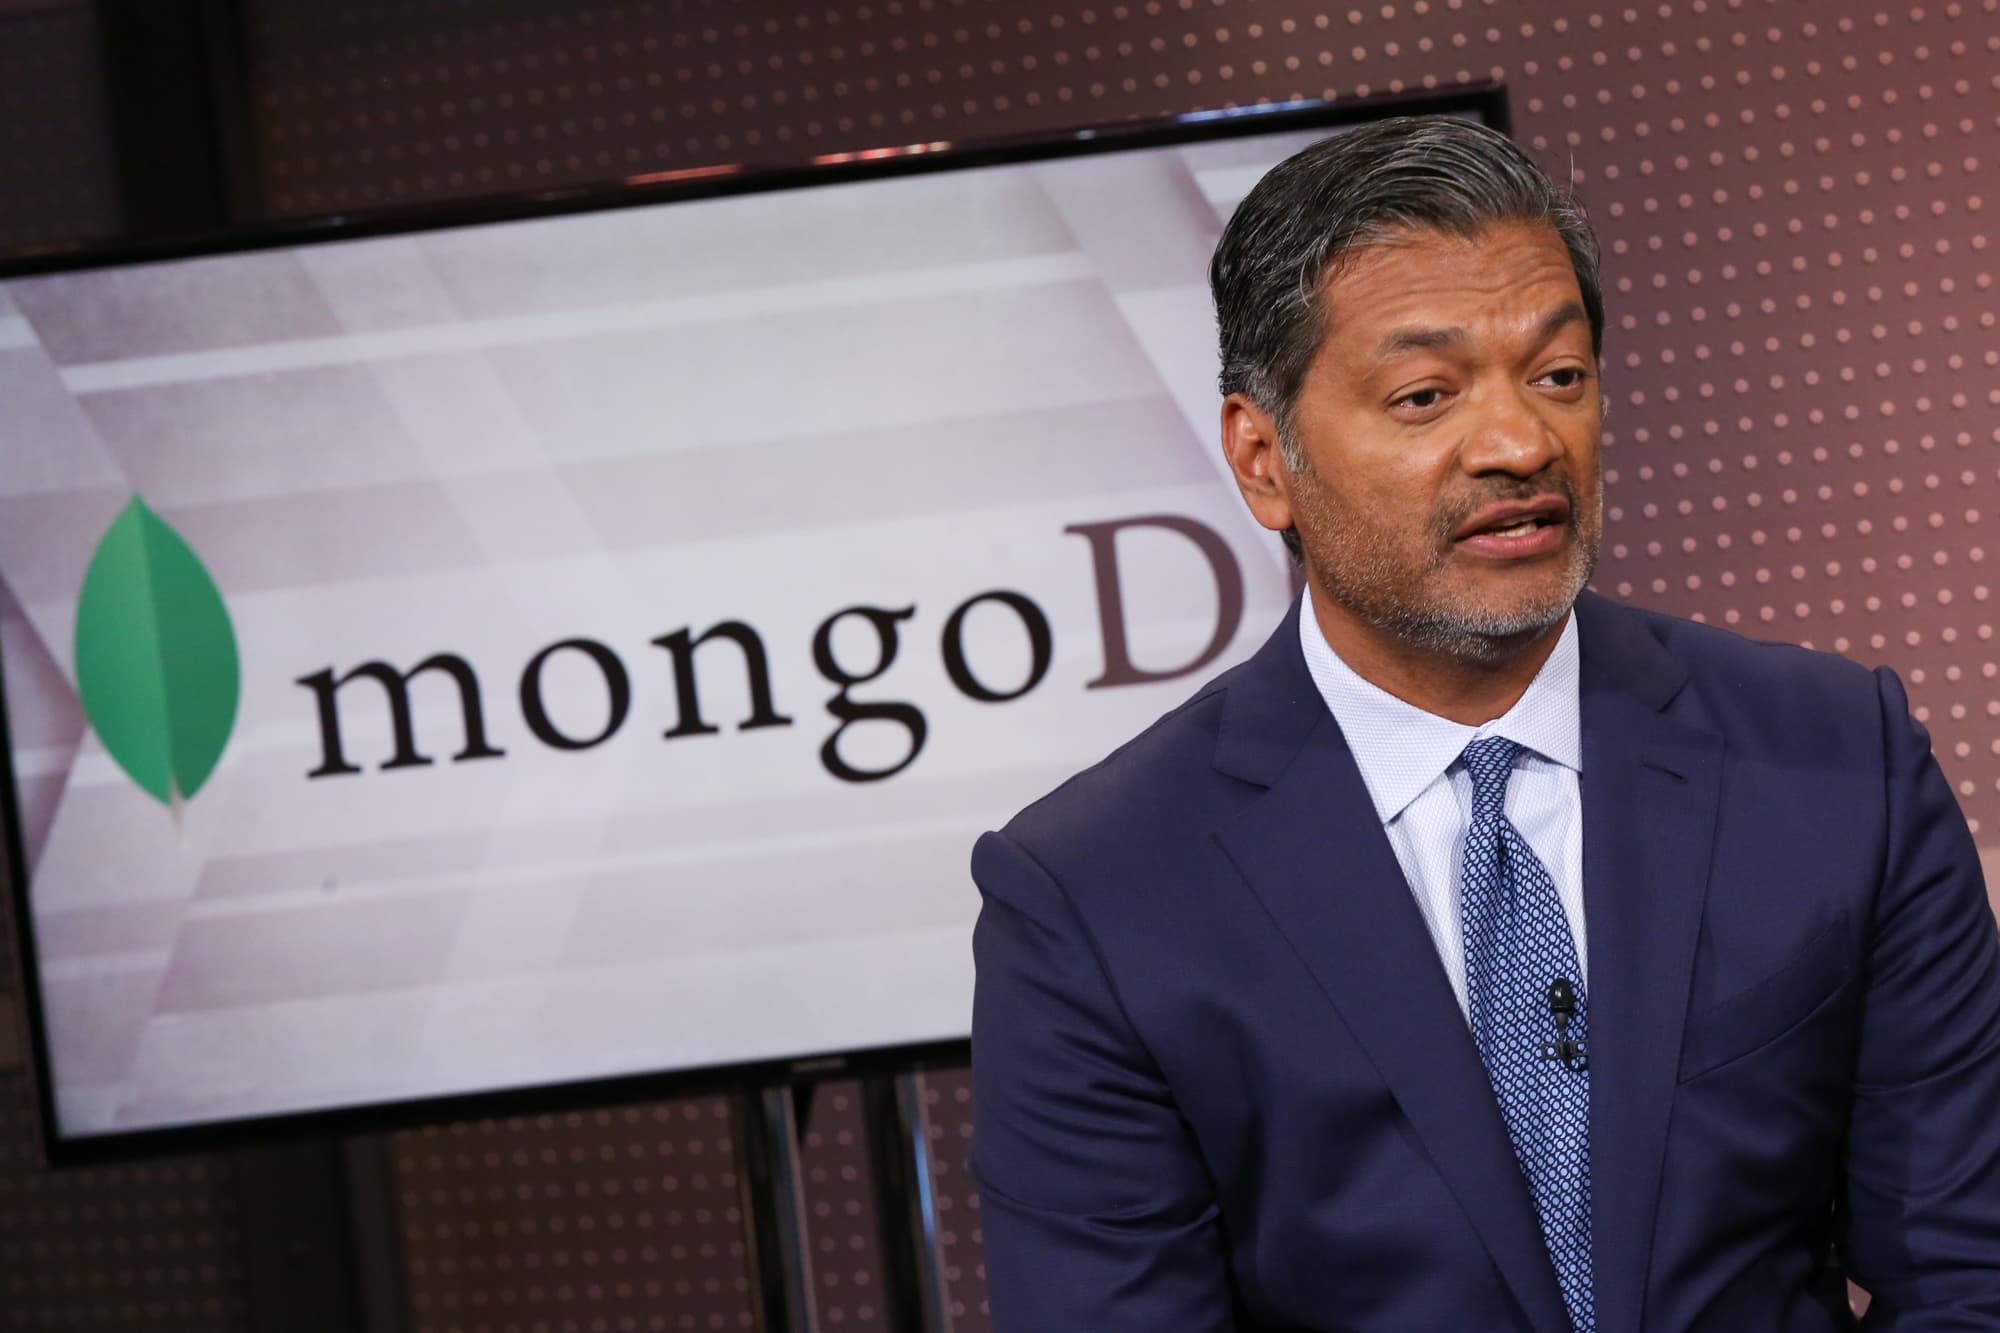 MongoDB shares jump as revenue growth accelerates